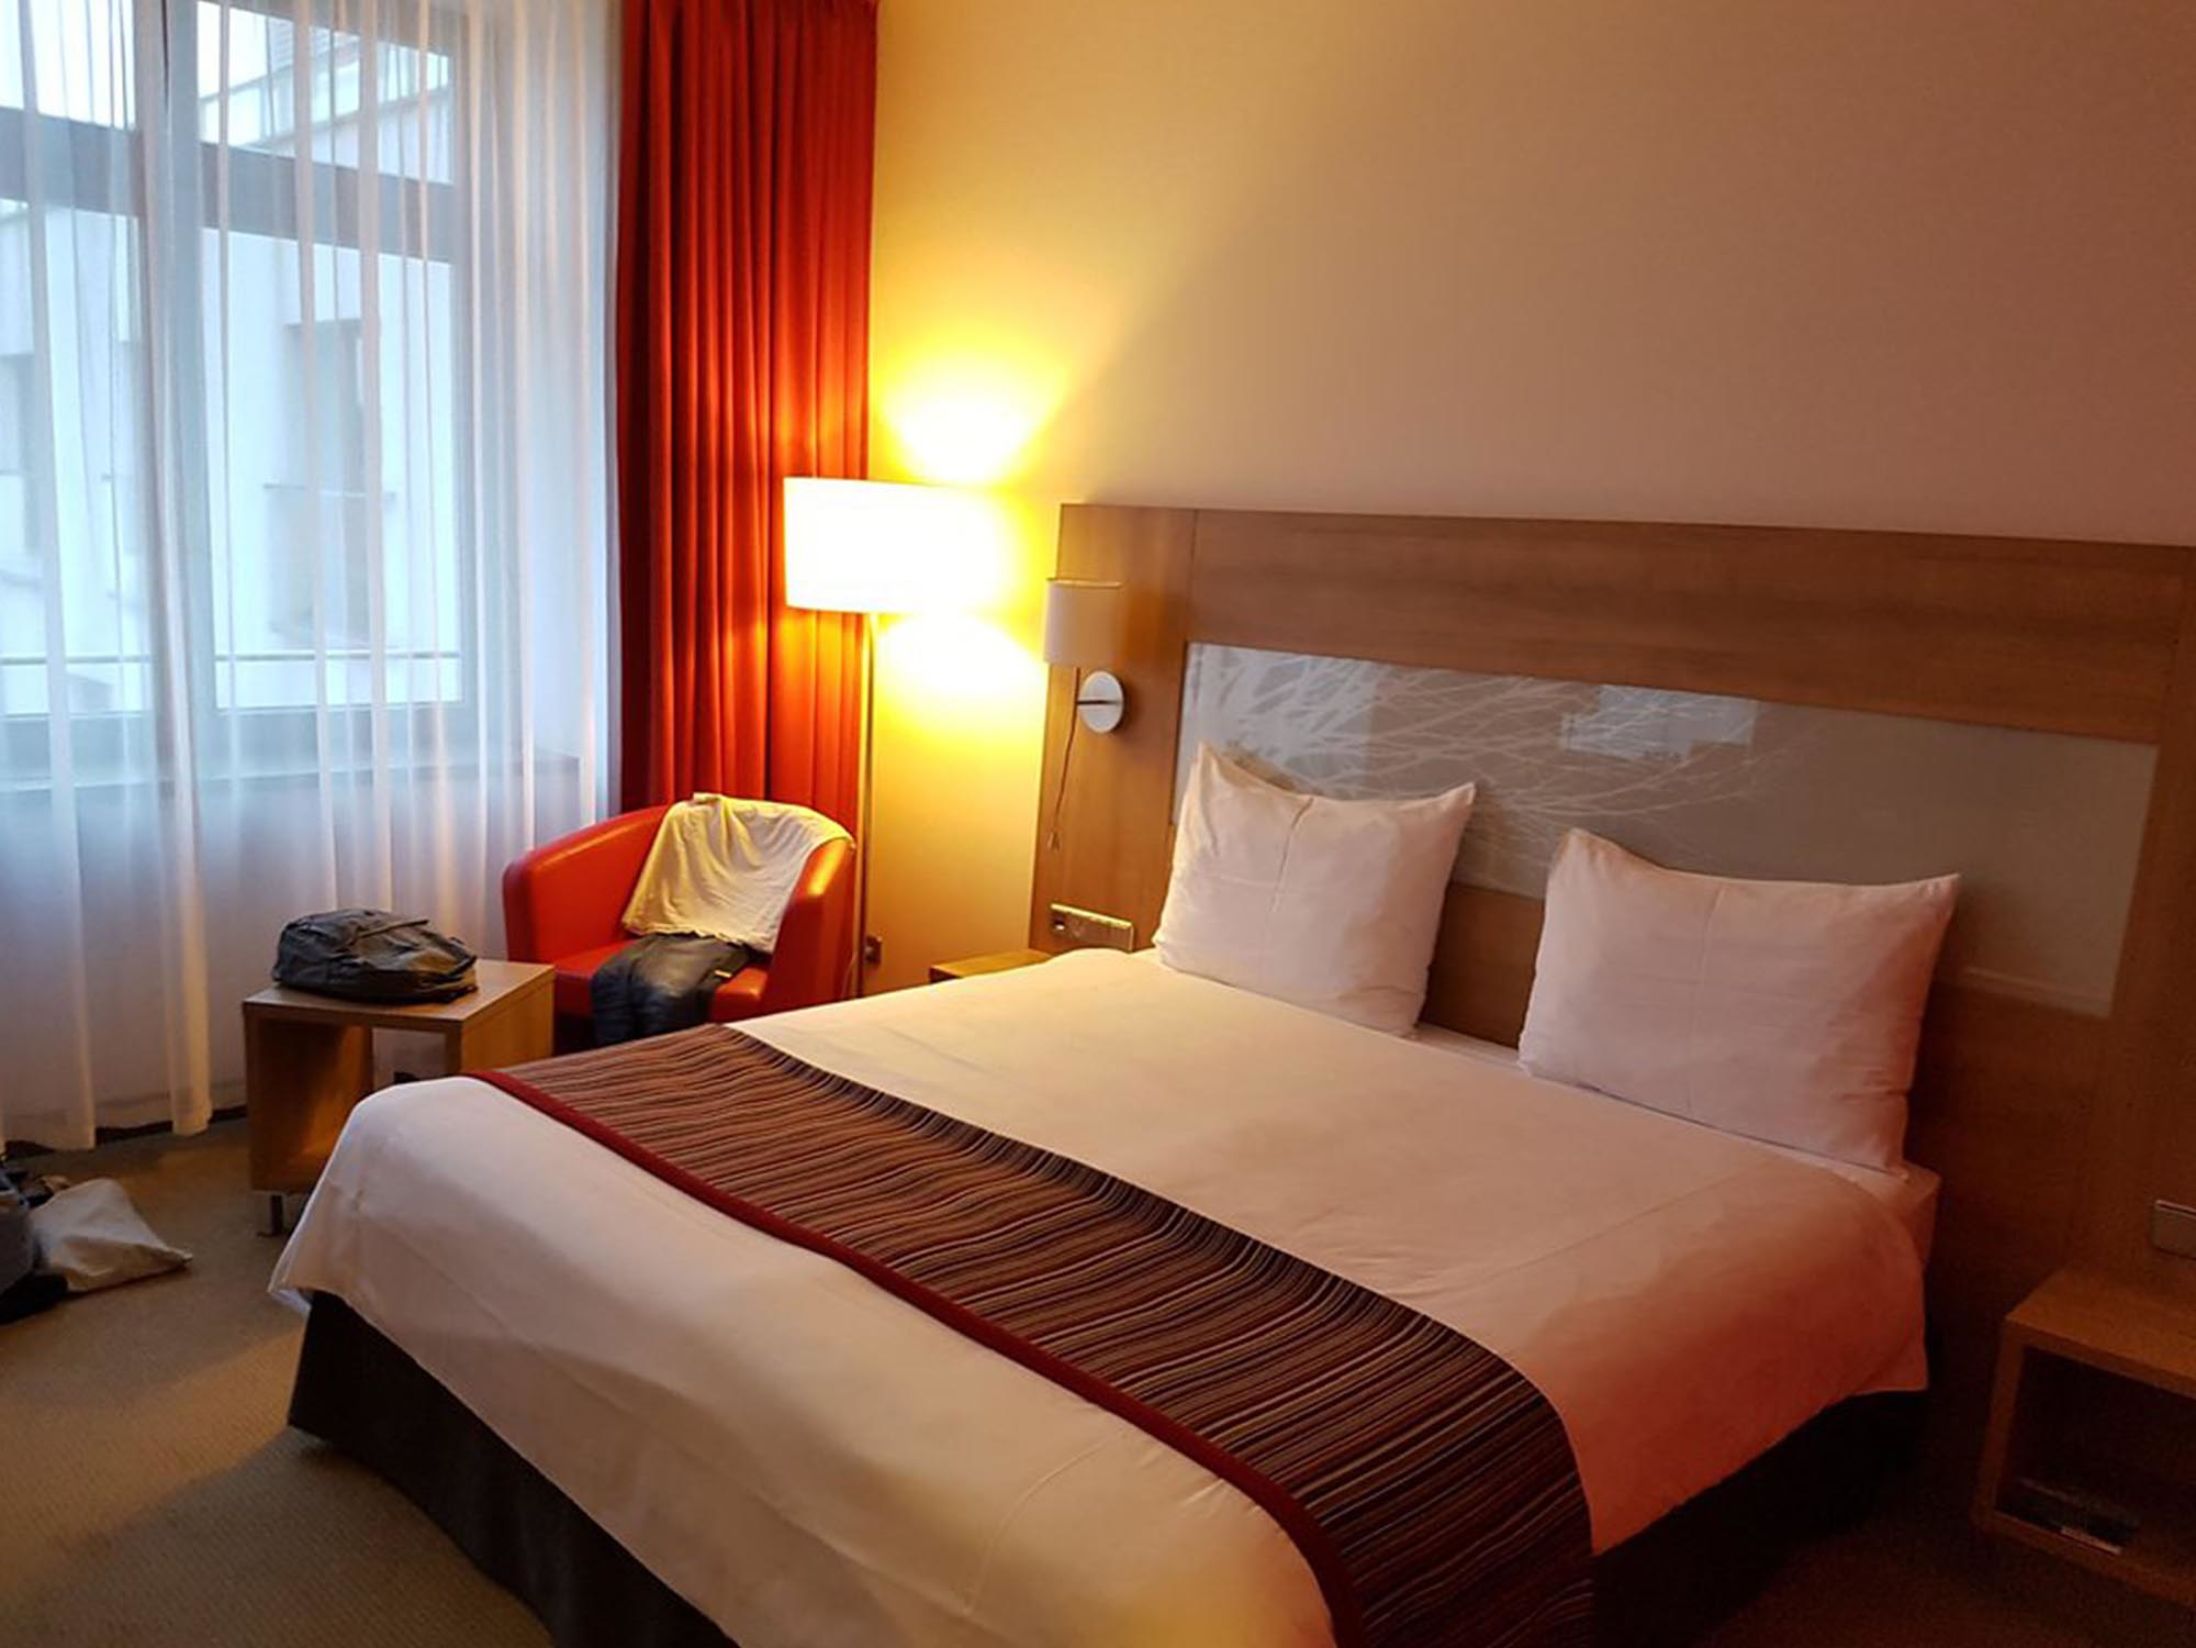 Amazing Hotels in Prague - Park Inn Hotel